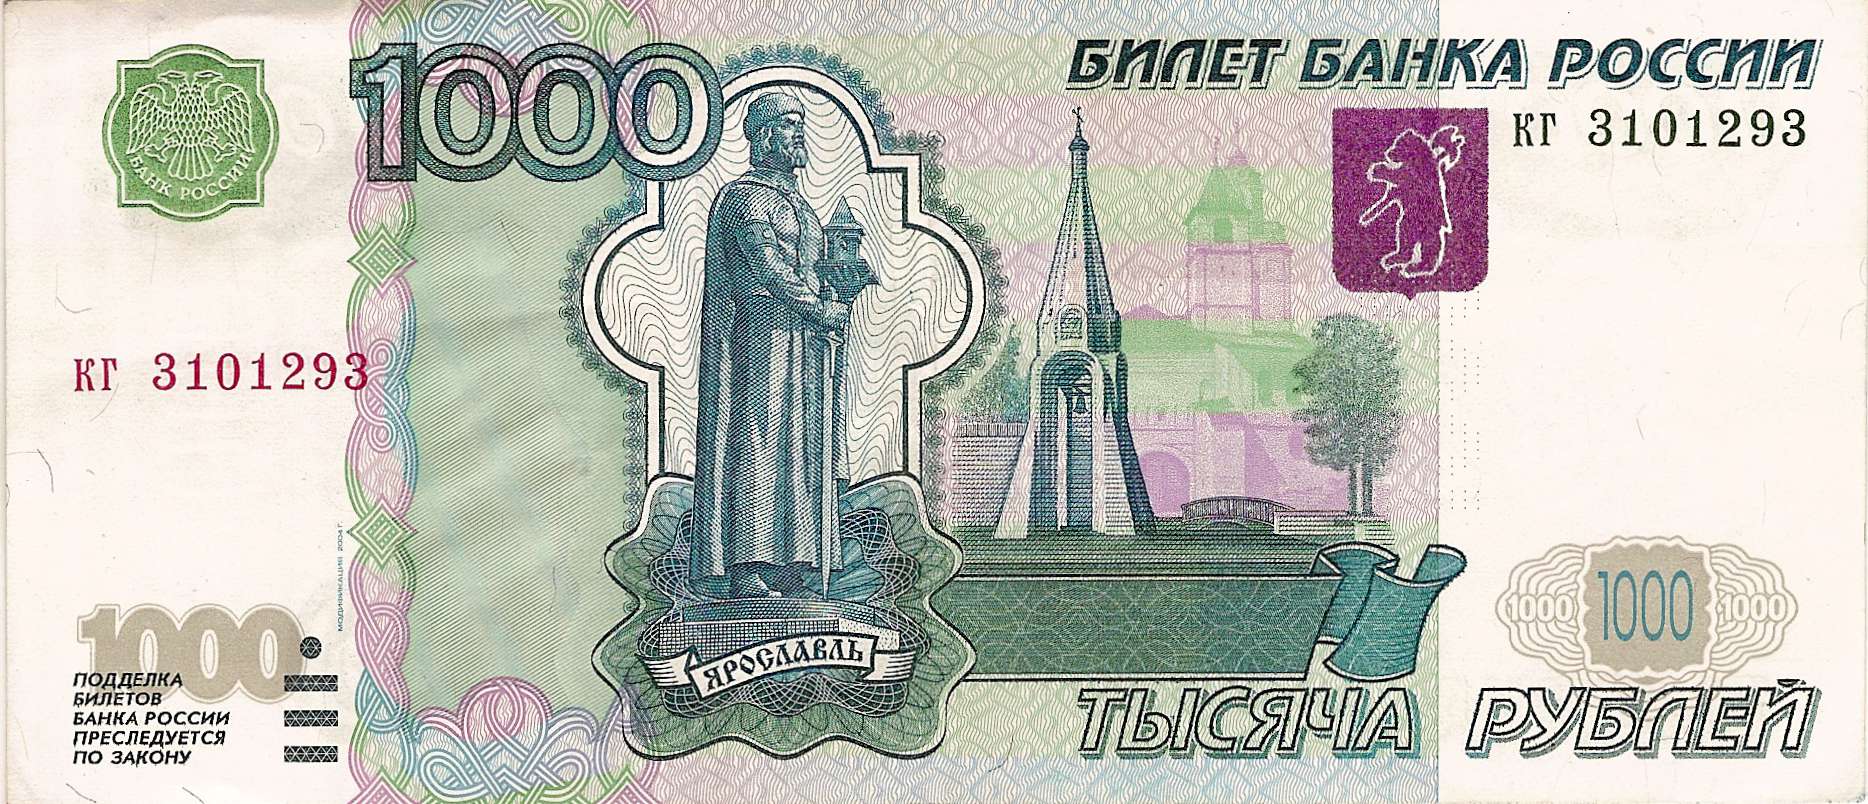 1000 рублей на steam фото 79